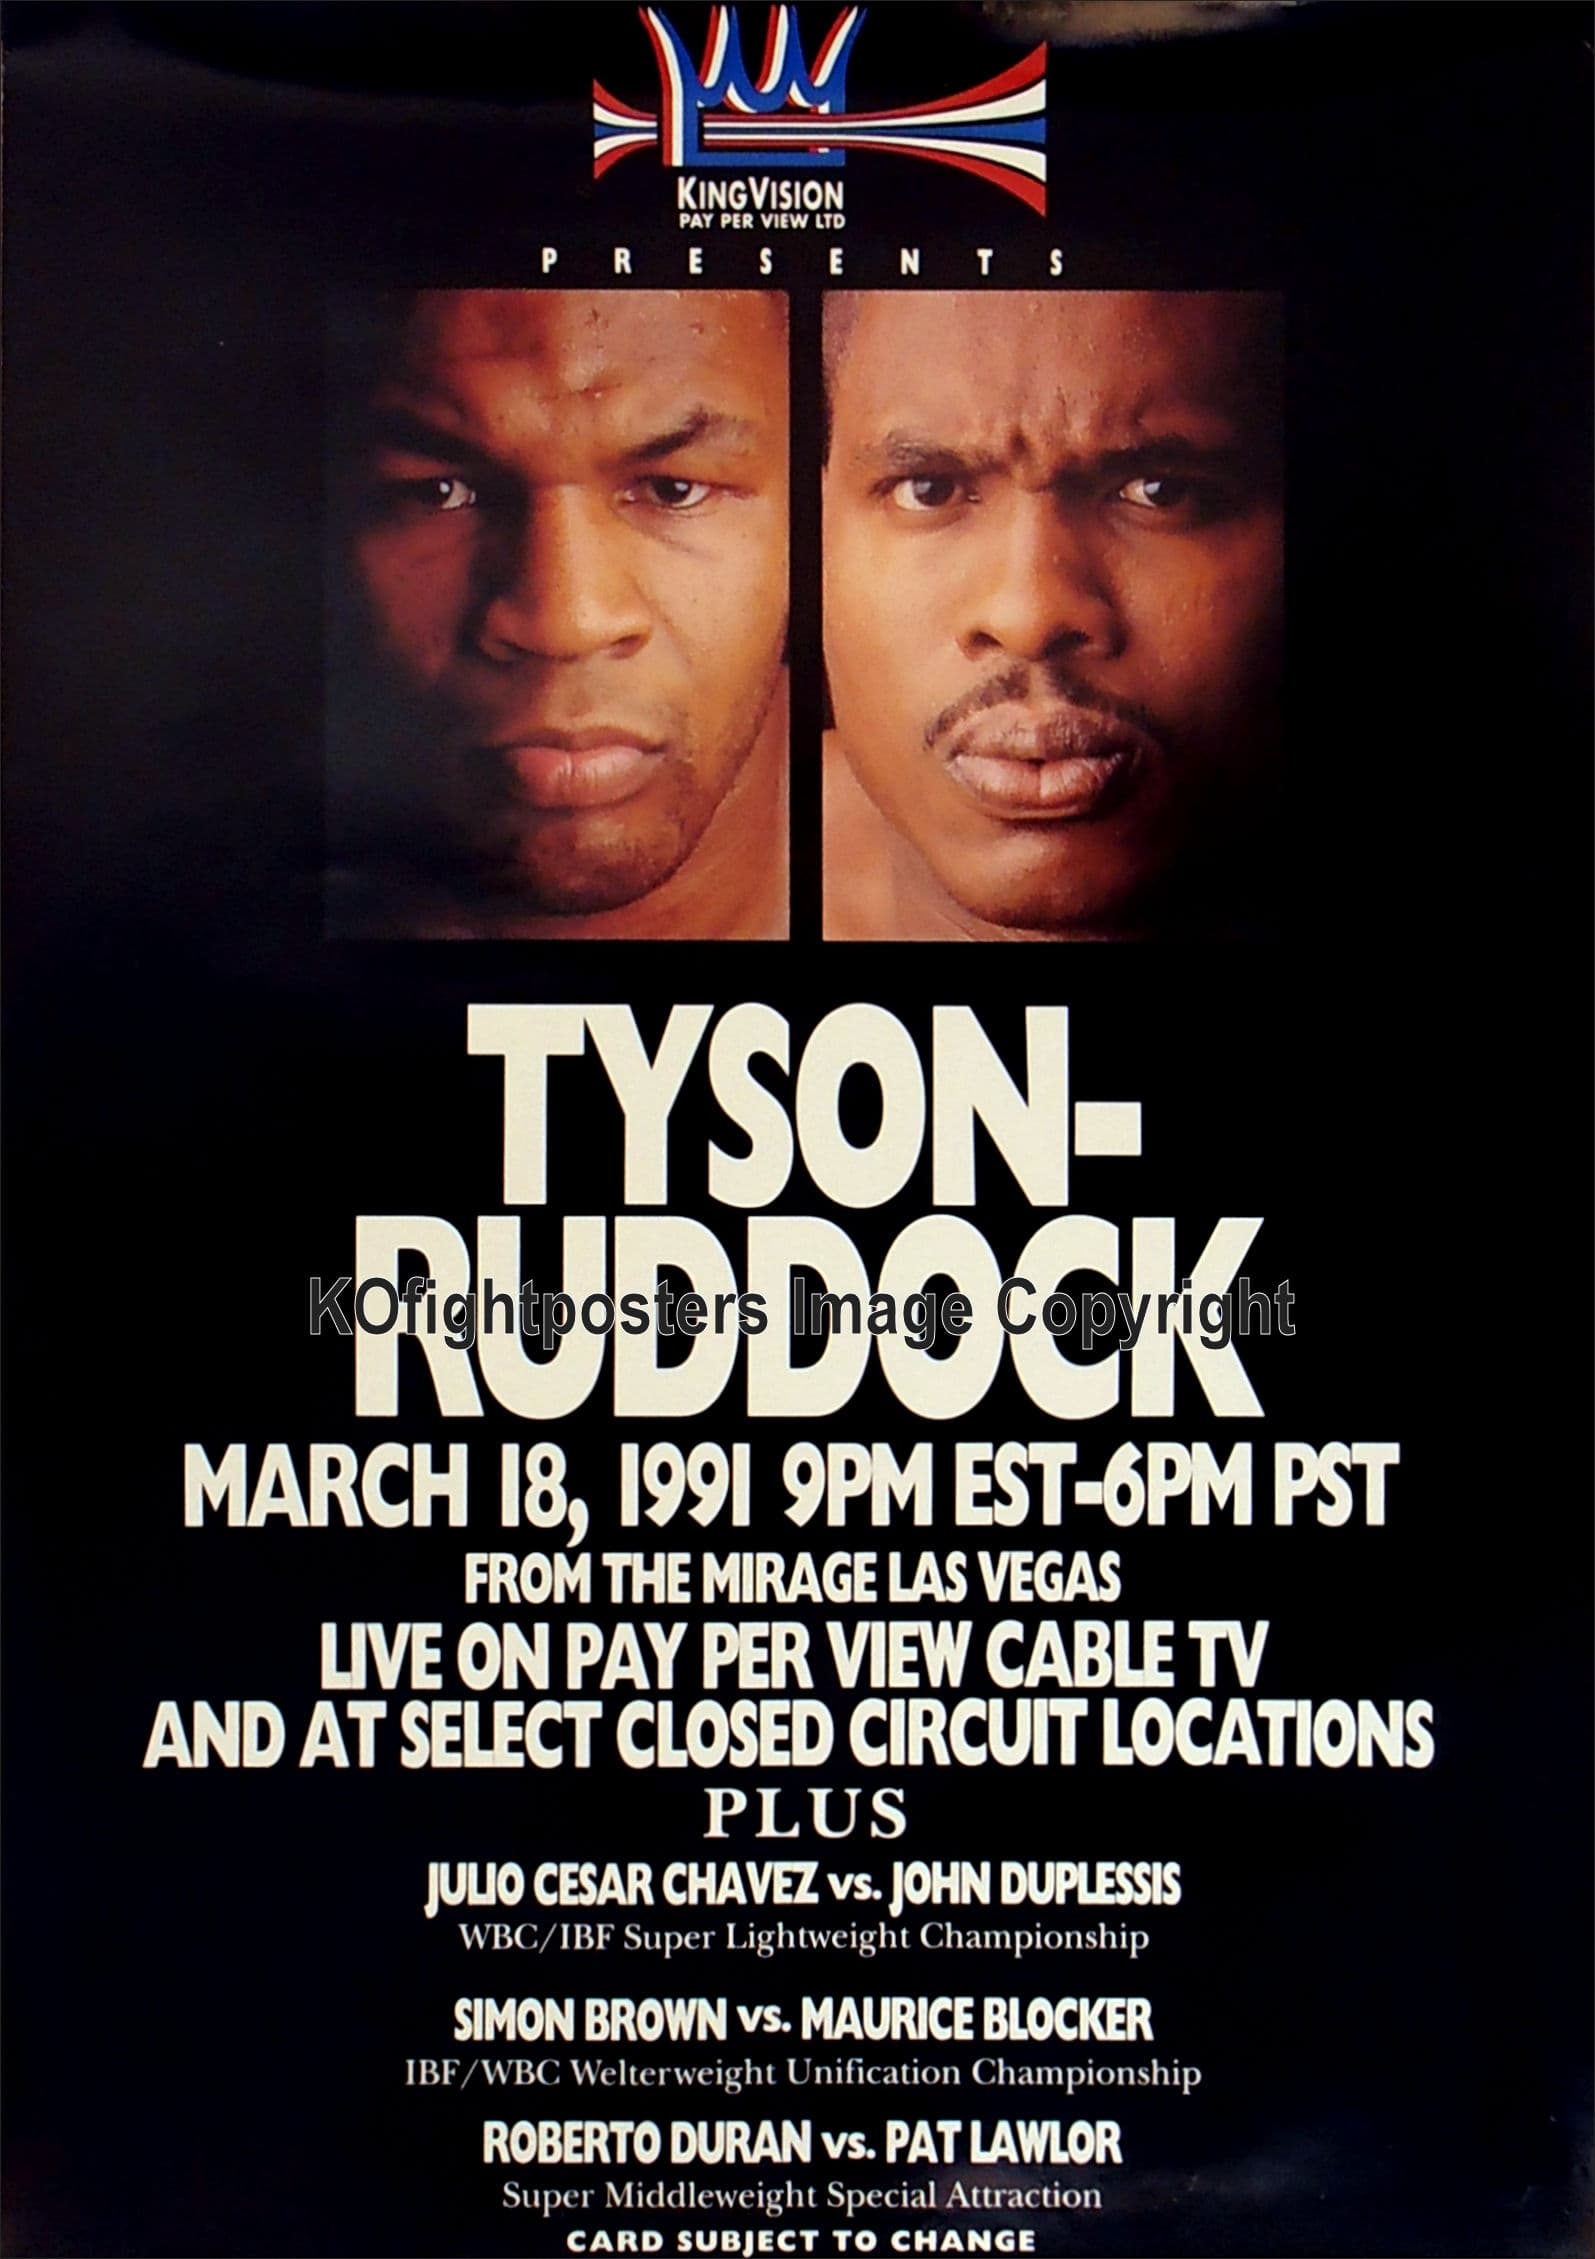 Mike Tyson vs Donovan Razor Ruddock I